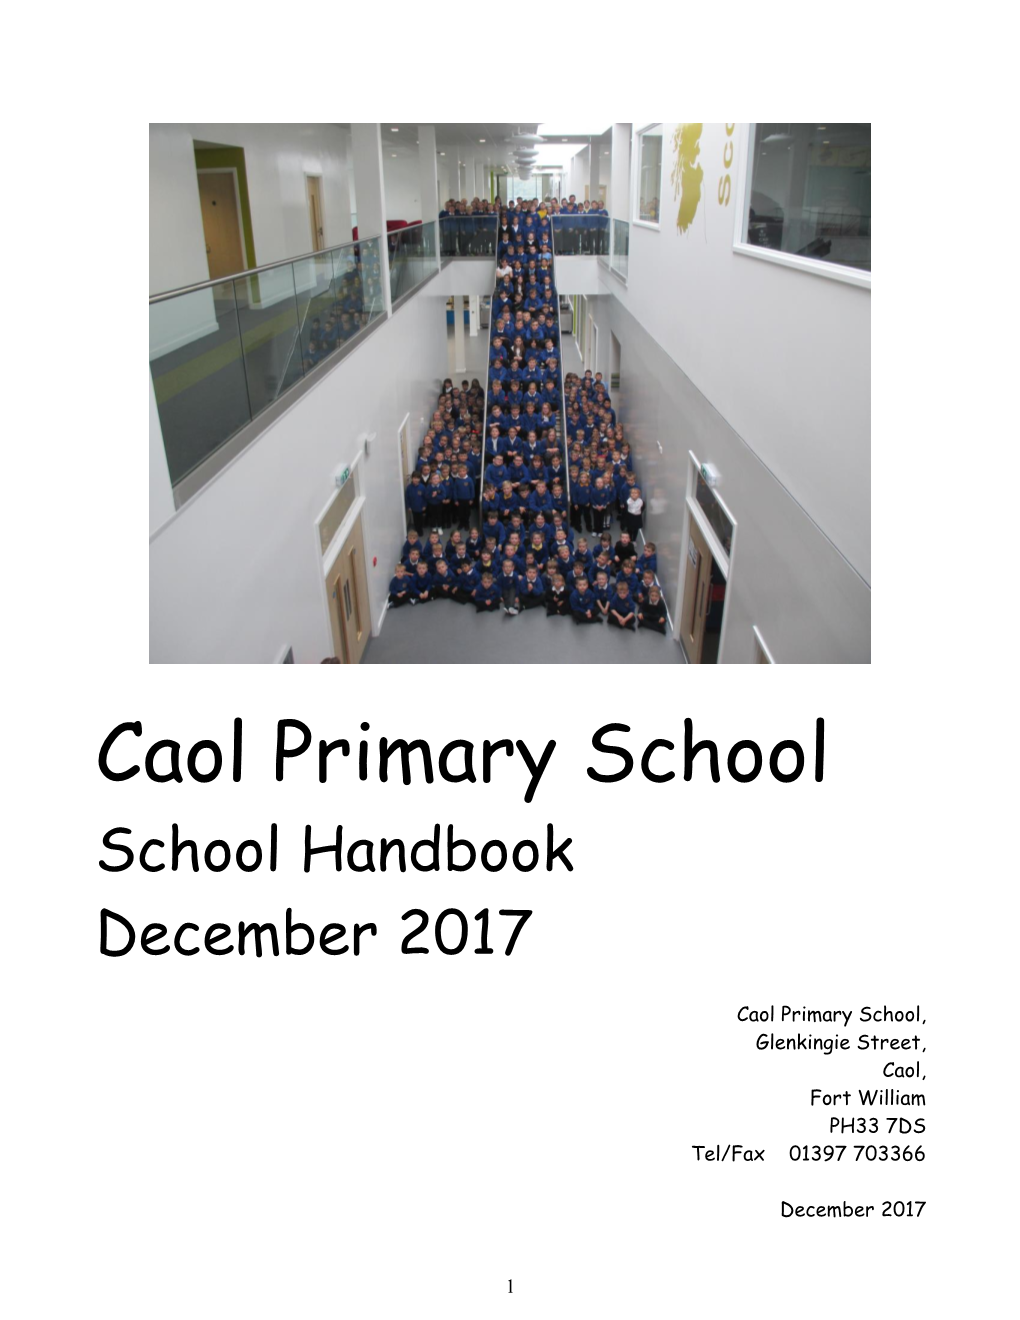 Caol Primary School, Glenkingie Street, Caol, Fort William PH33 7DS Tel/Fax 01397 703366